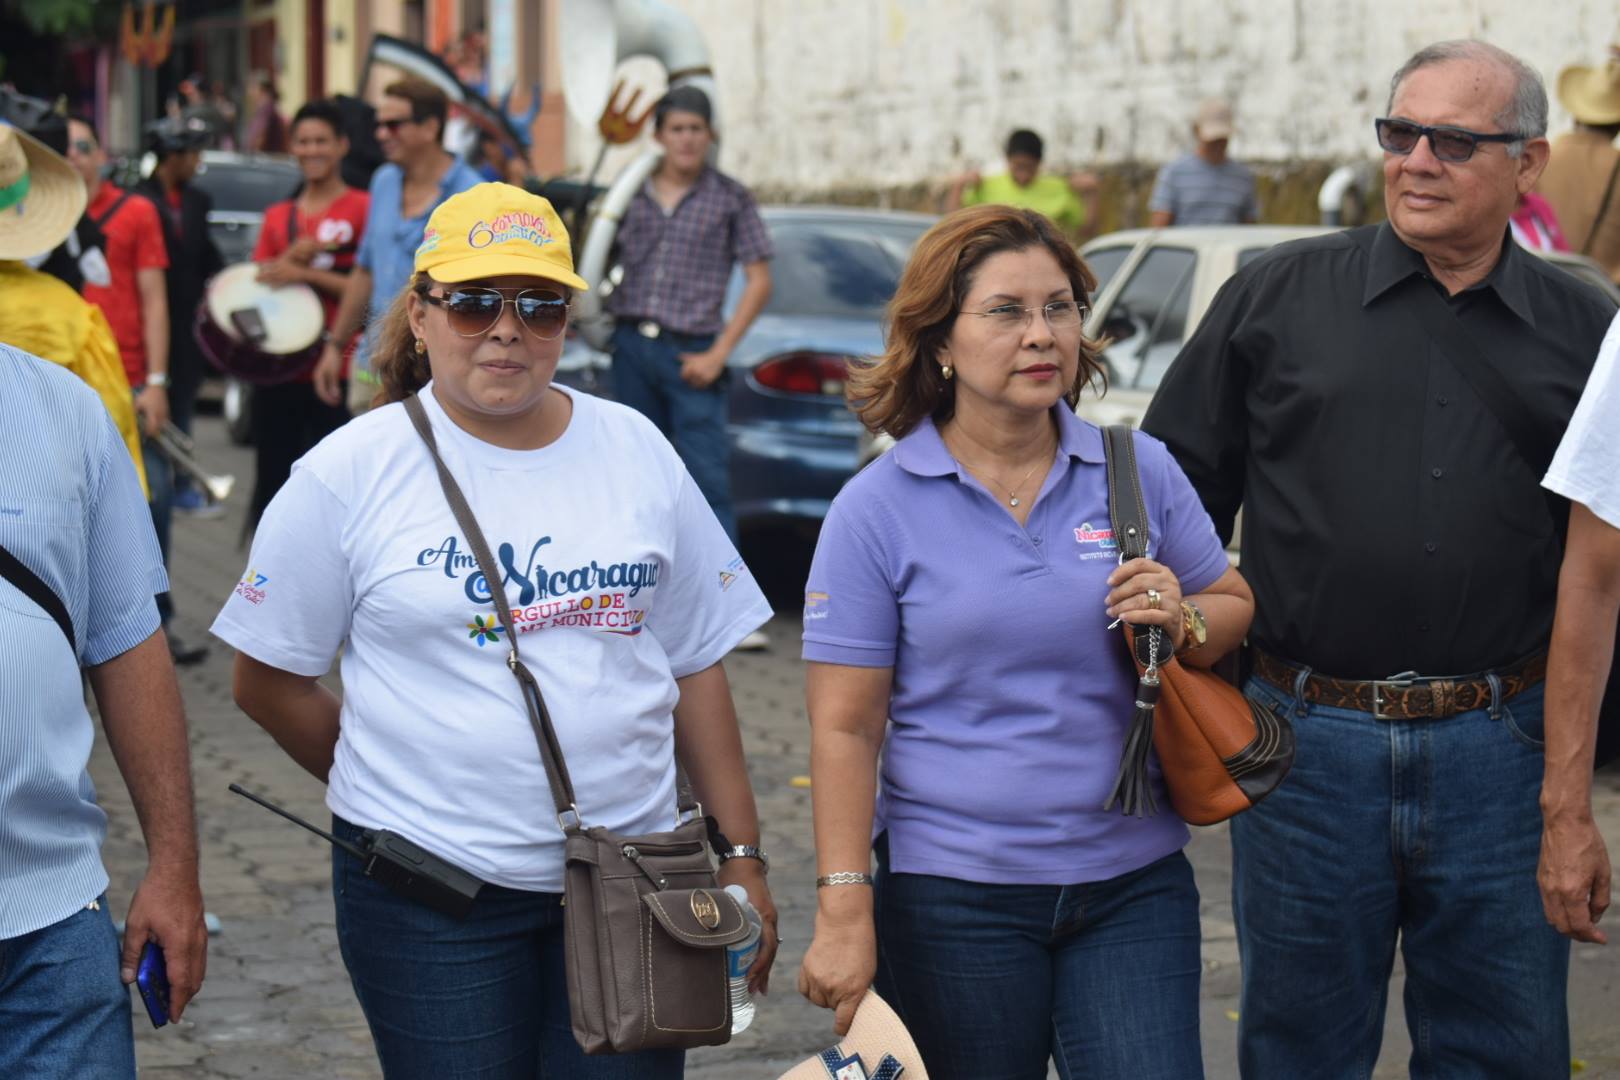 Granada visita Chontales en “Amor a Nicaragua”